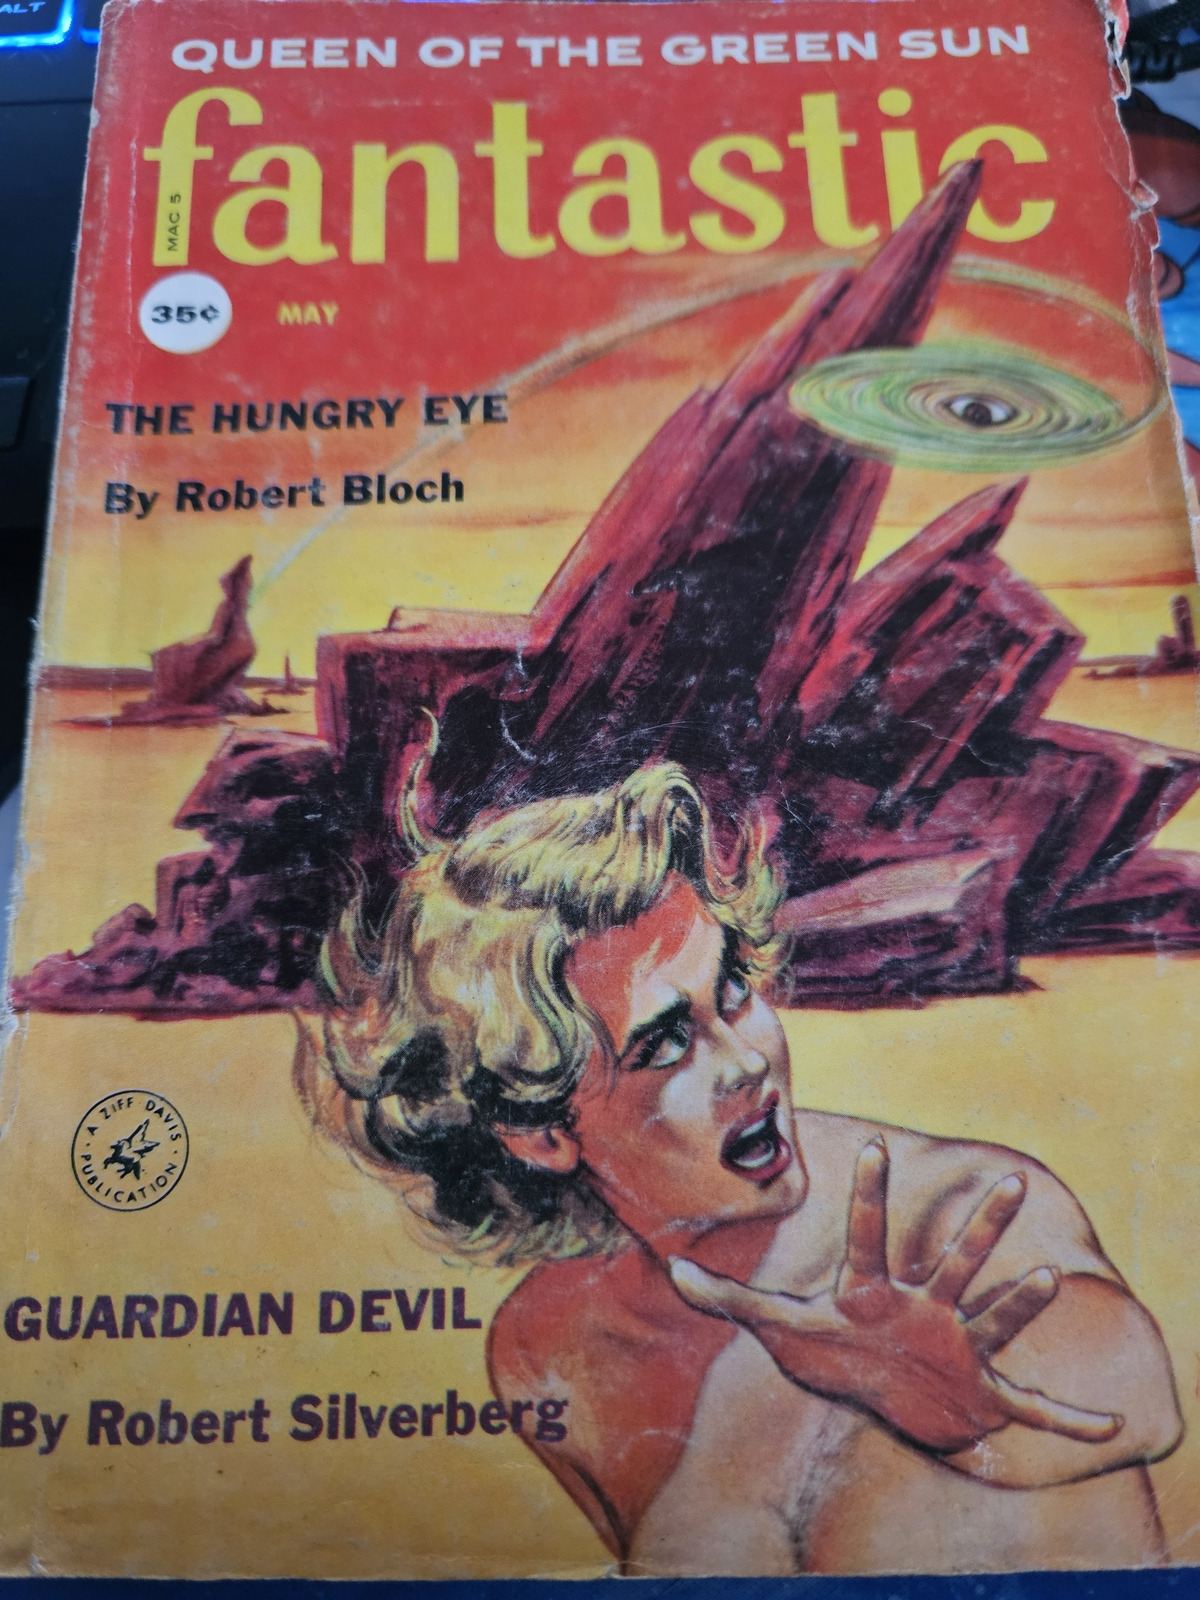 FANTASTIC STORIES MAY 1959 VIRGIL FINLAY ART GUARDIAN DEVIL BY ROBERT SILVERBERG